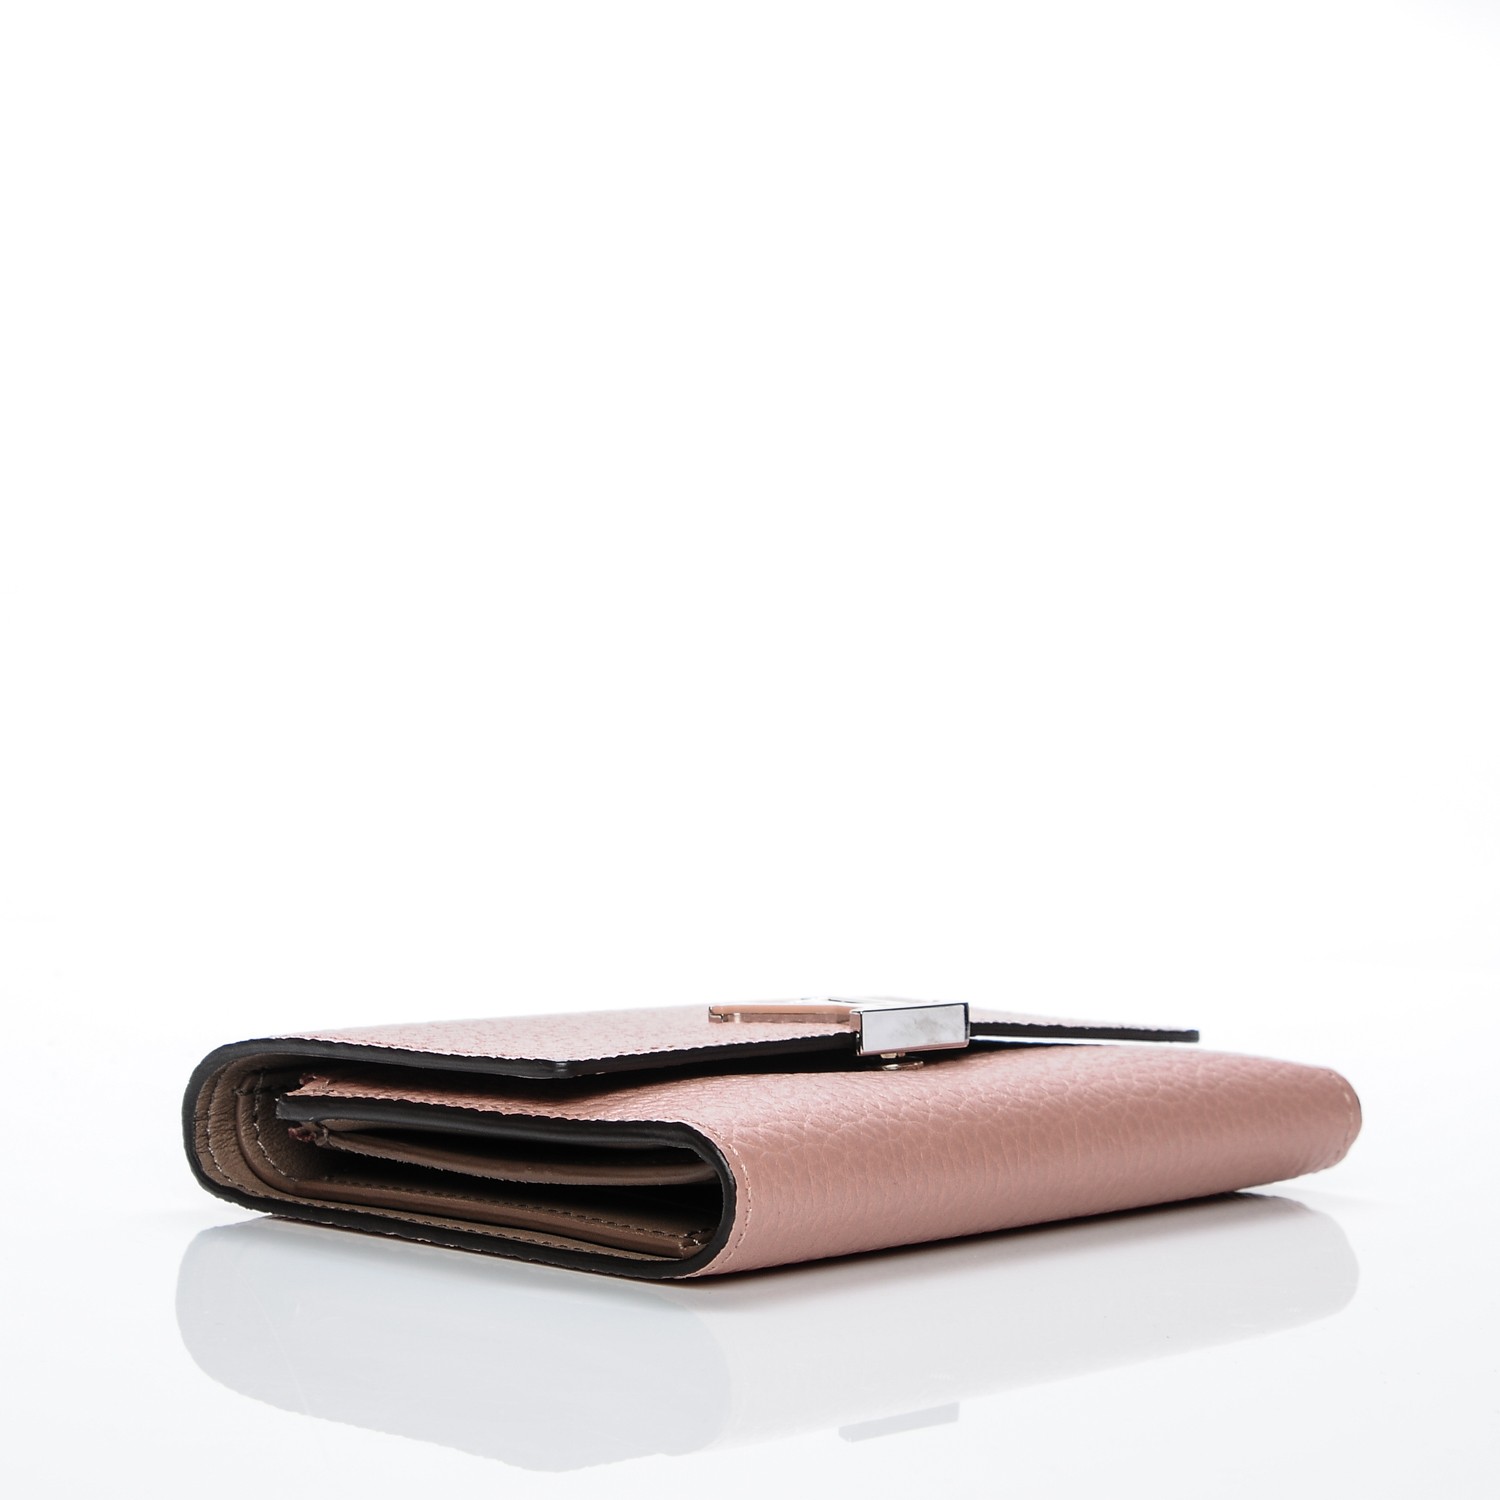 Louis Vuitton Capucines Compact Wallet magnolia - Good or Bag